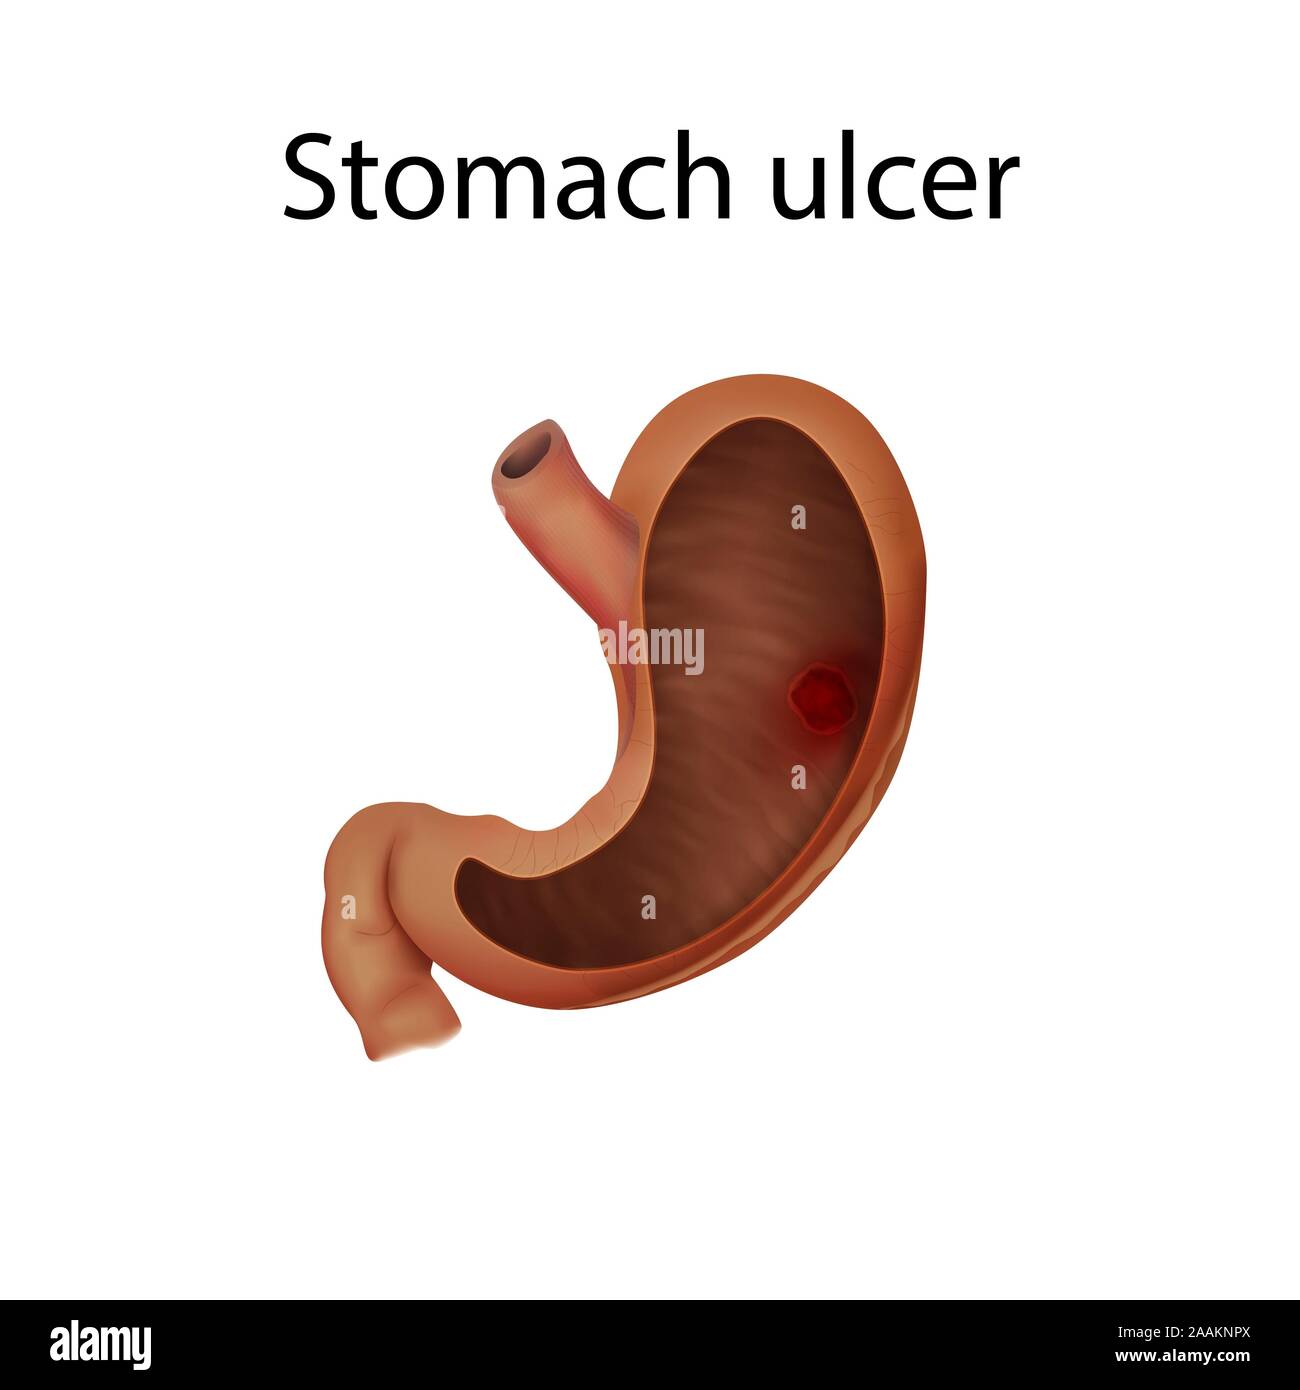 Stomach ulcer, illustration. Stock Photo